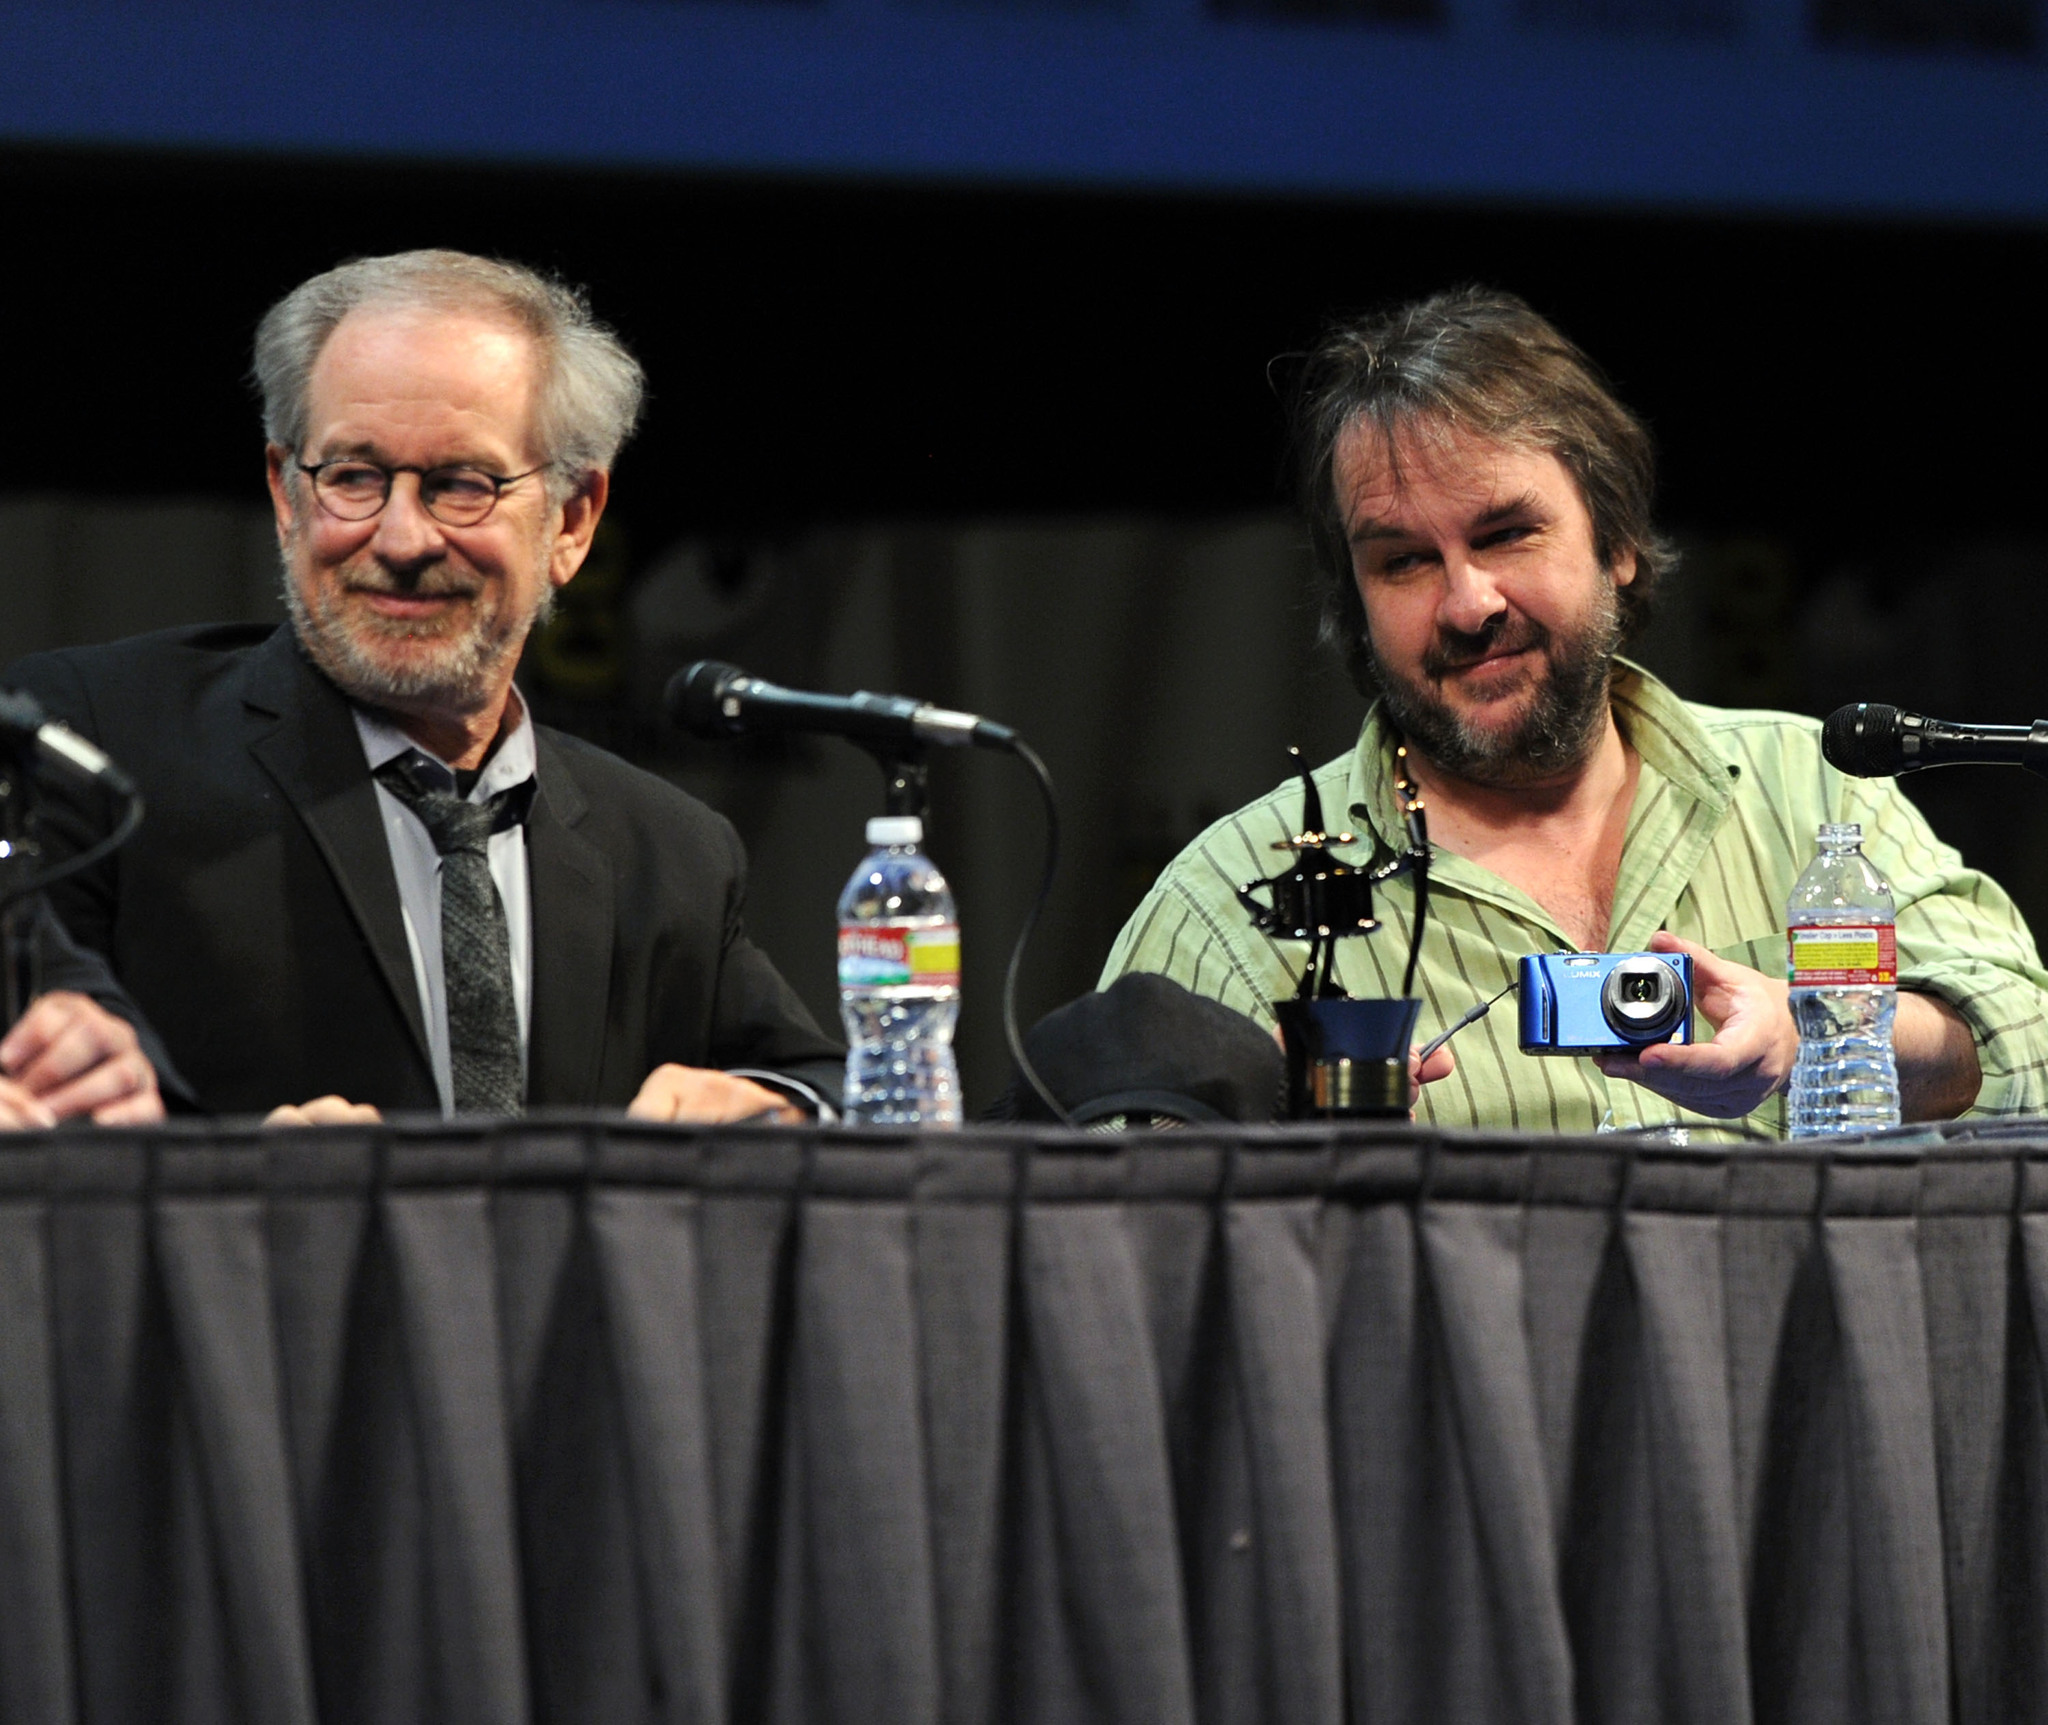 Steven Spielberg and Peter Jackson